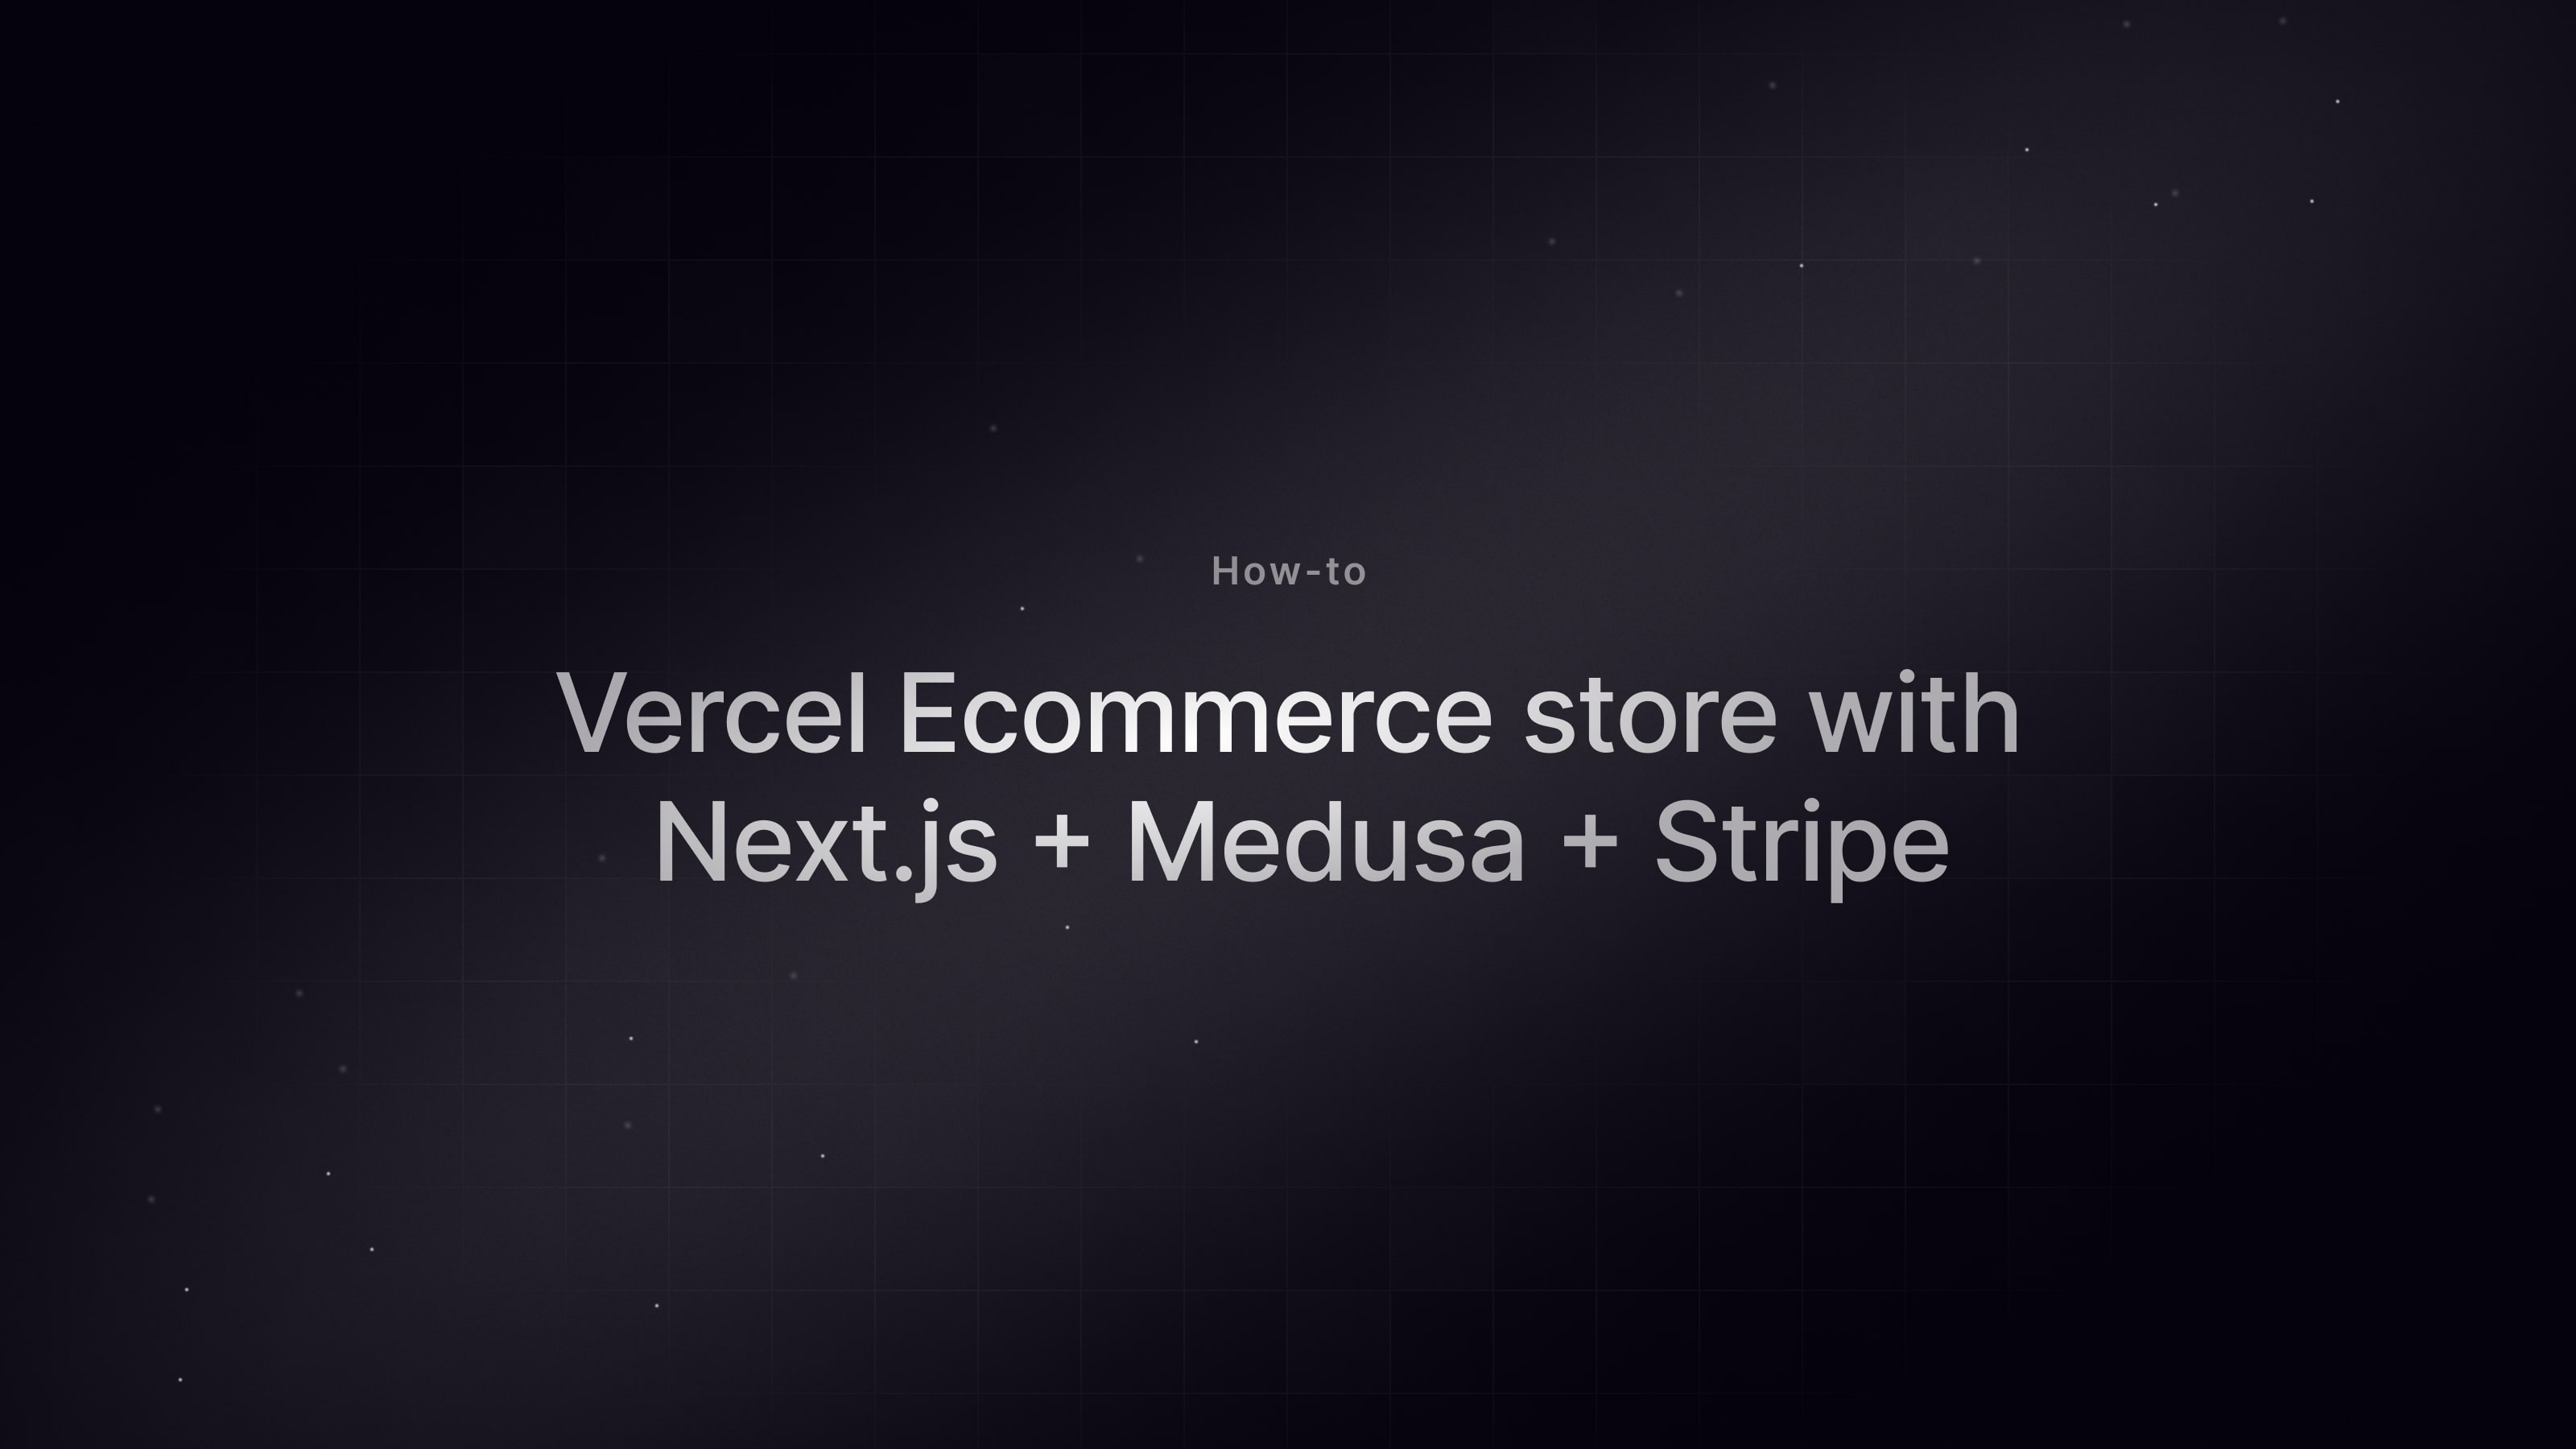 Vercel Ecommerce: Ecommerce store with Next.js + Medusa + Stripe